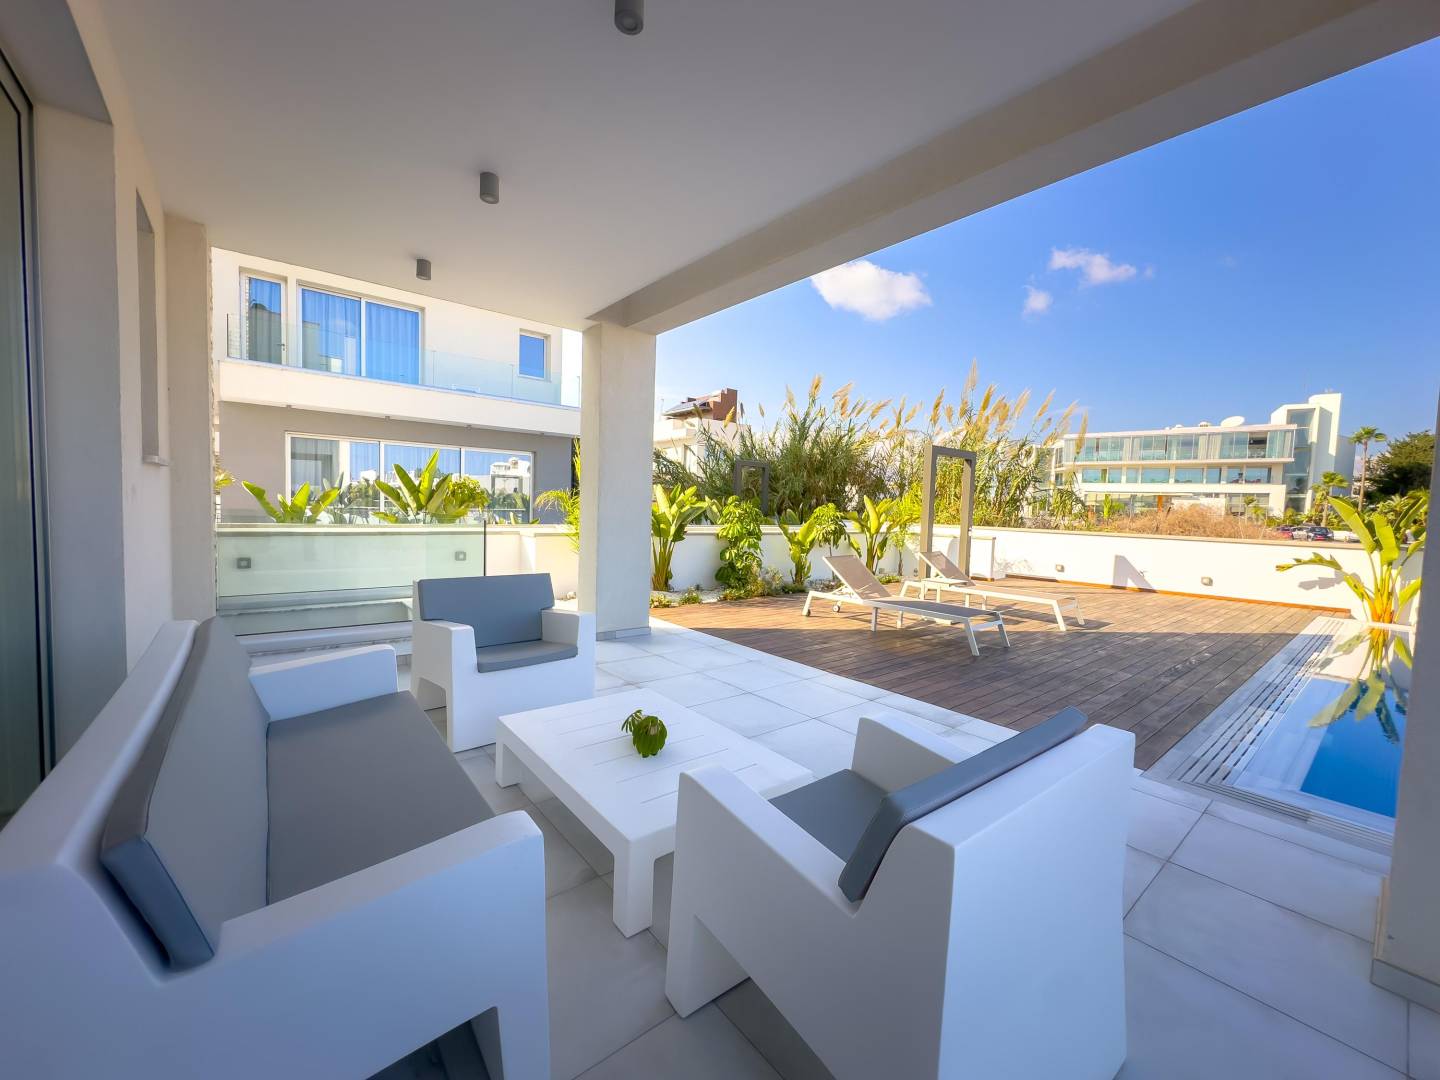 4 Bedroom Villa for Sale in Famagusta – Agia Napa